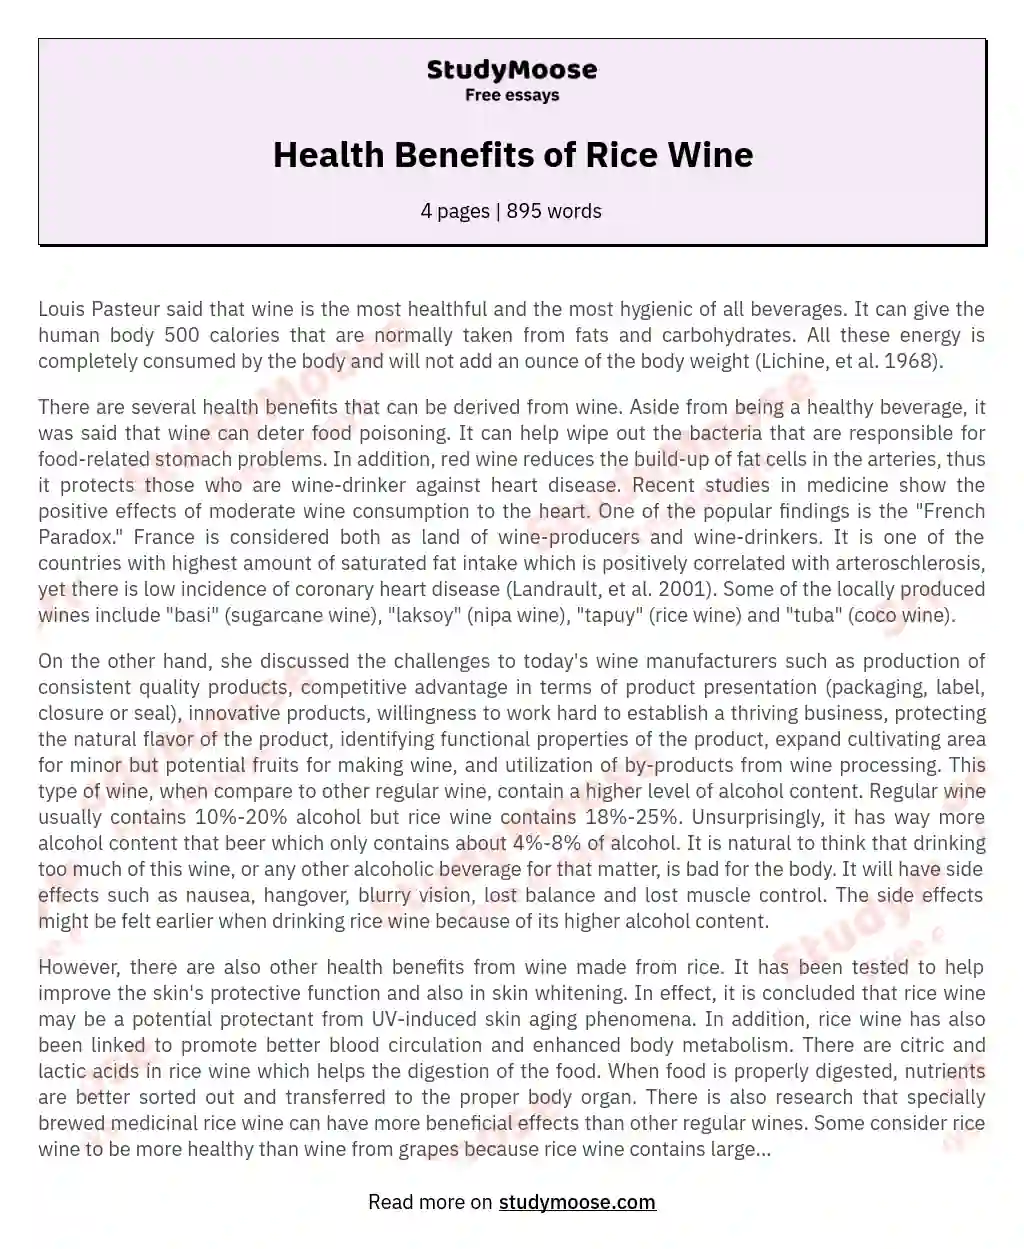 Health Benefits of Rice Wine